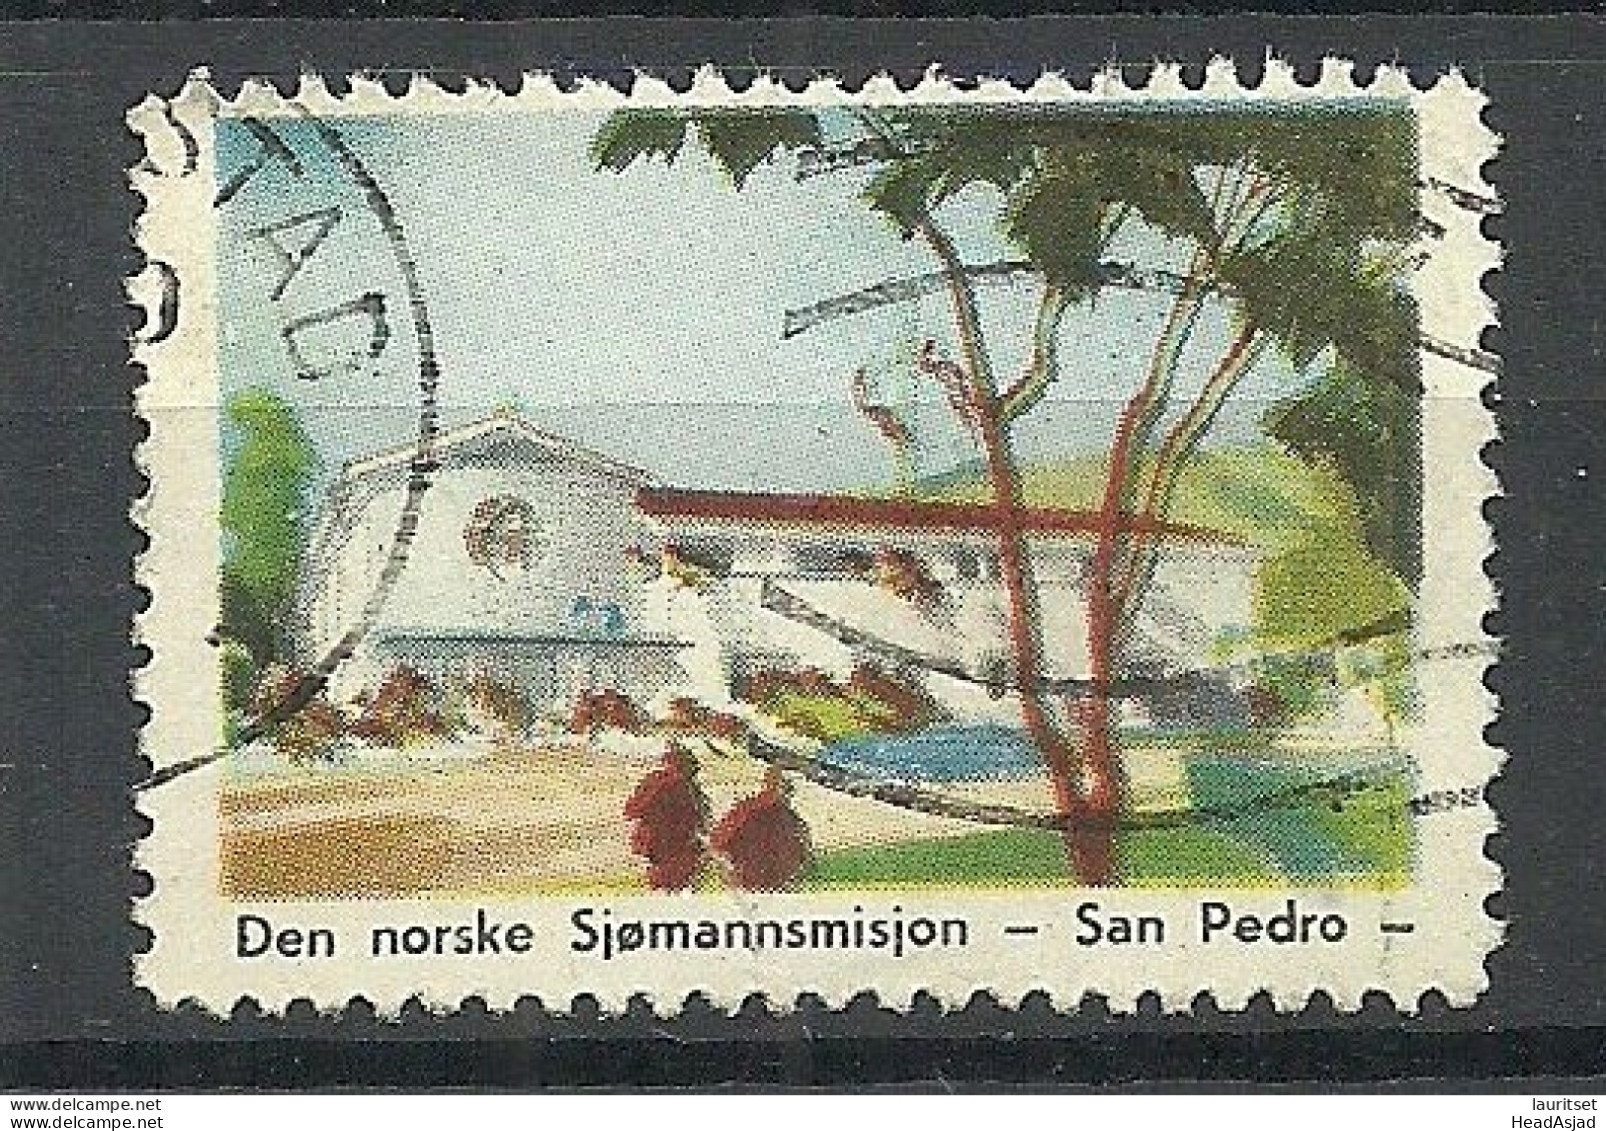 NORWAY Sailors Home San Pedro Vignette Poster Stamp O - Ships